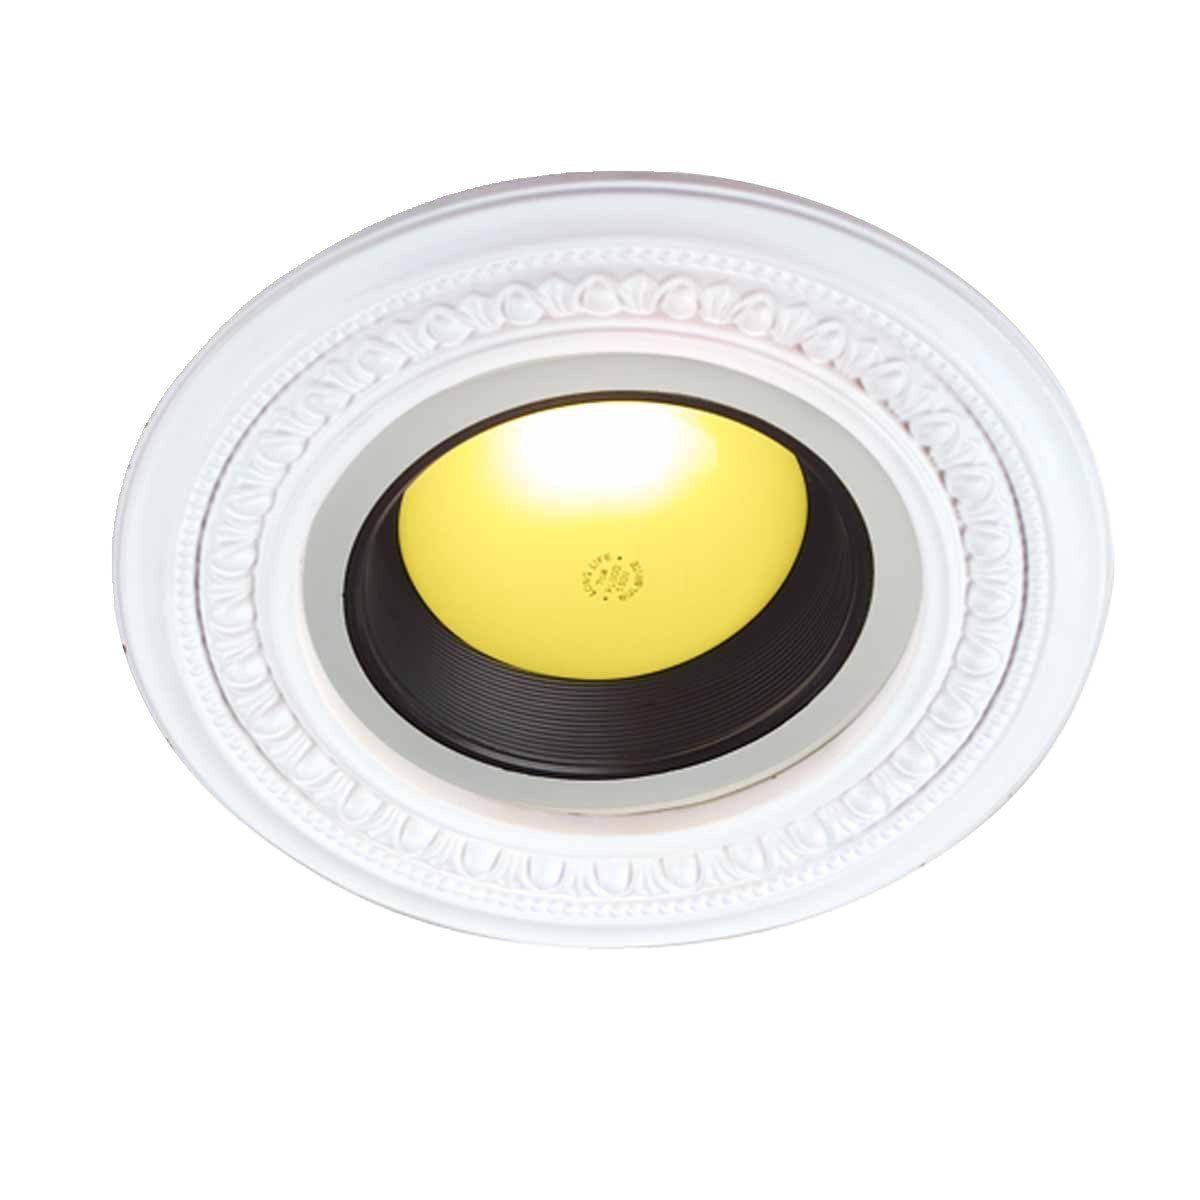 Lit A Deux Place Joli Recessed Spot Light Trim Egg and Dart Molding White Urethane Ceiling